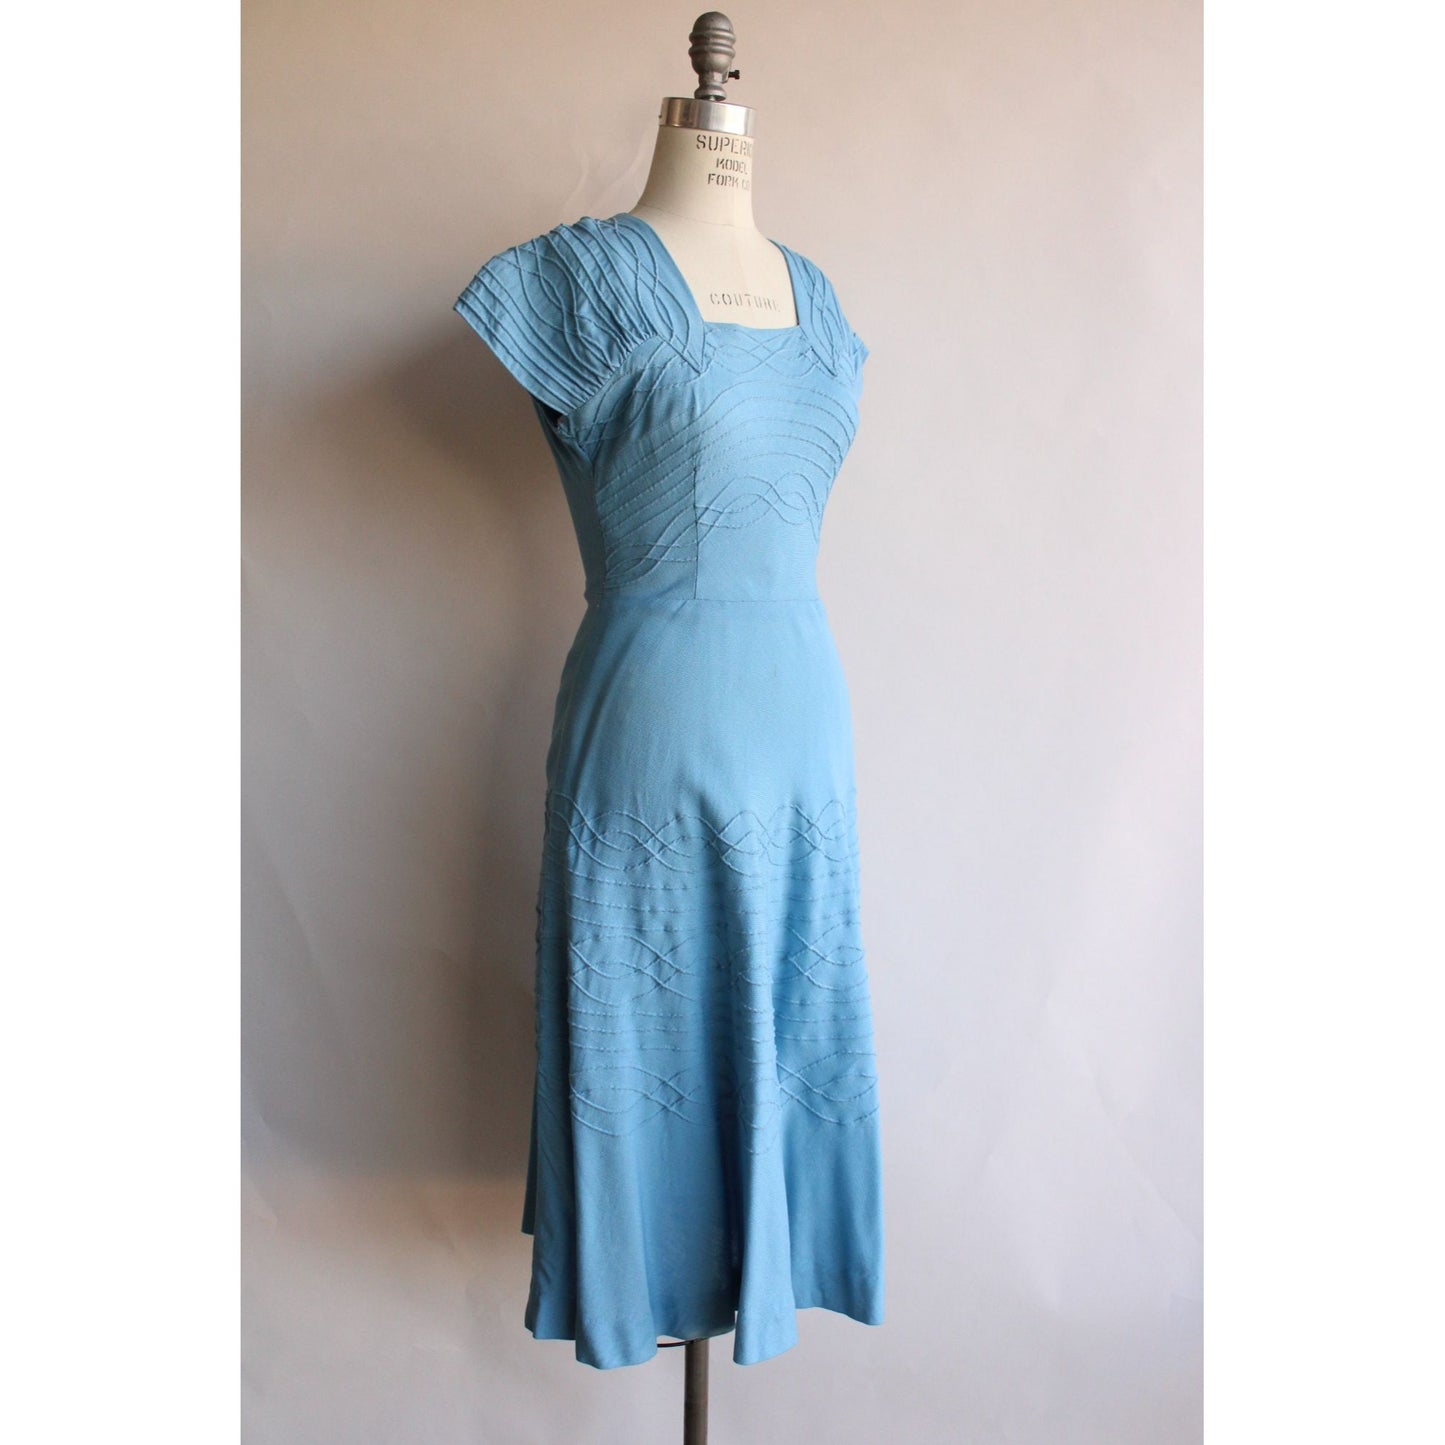 Vintage 1940s 1950s Dress / Sky Blue Woven Cotton  with Keyhole Back